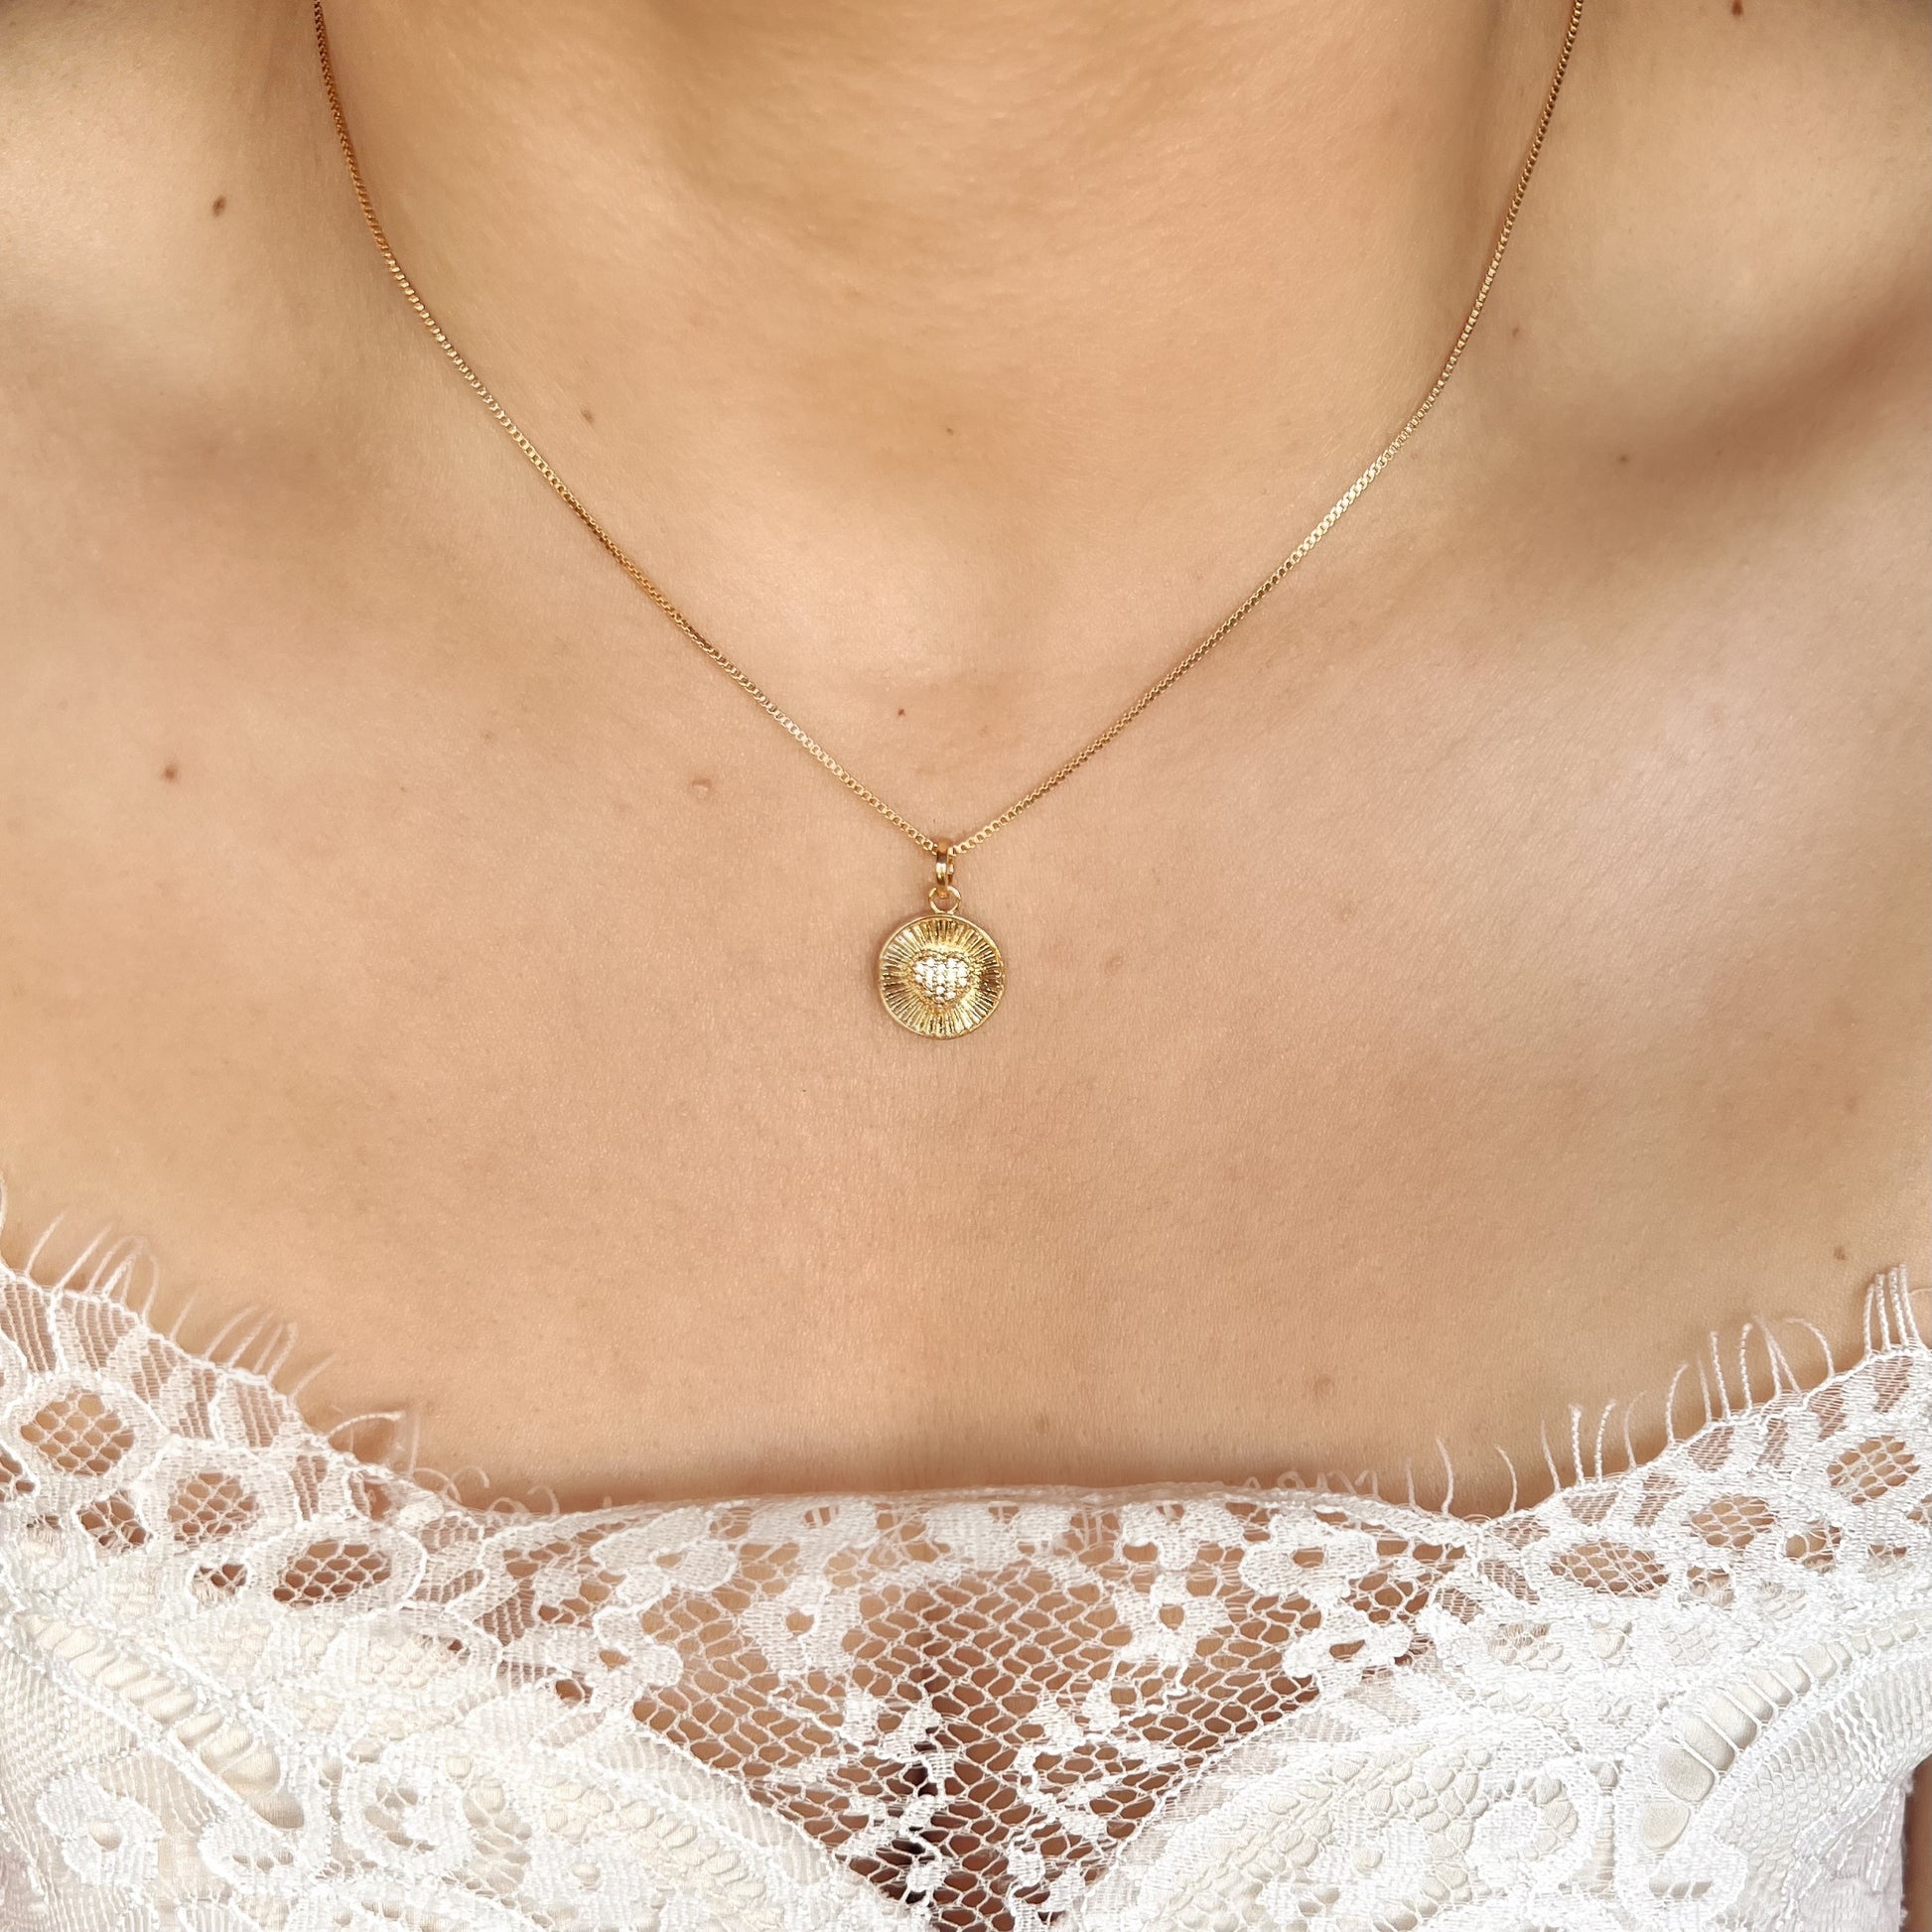 GoldFi 18k Gold Filled Spoke Textured Charm Heart Cubic Zirconia